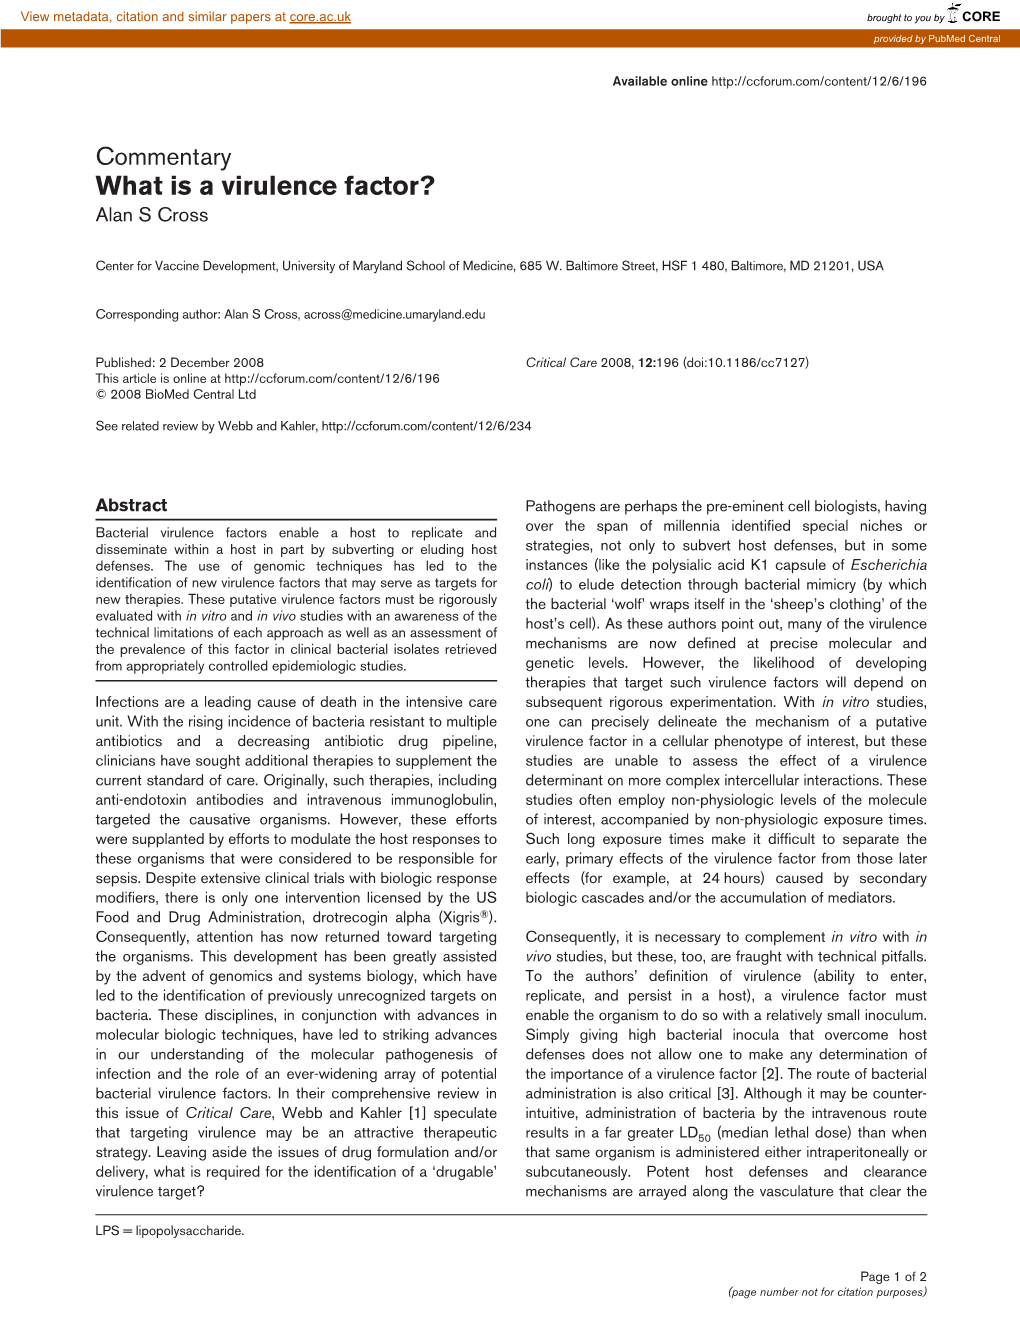 What Is a Virulence Factor? Alan S Cross